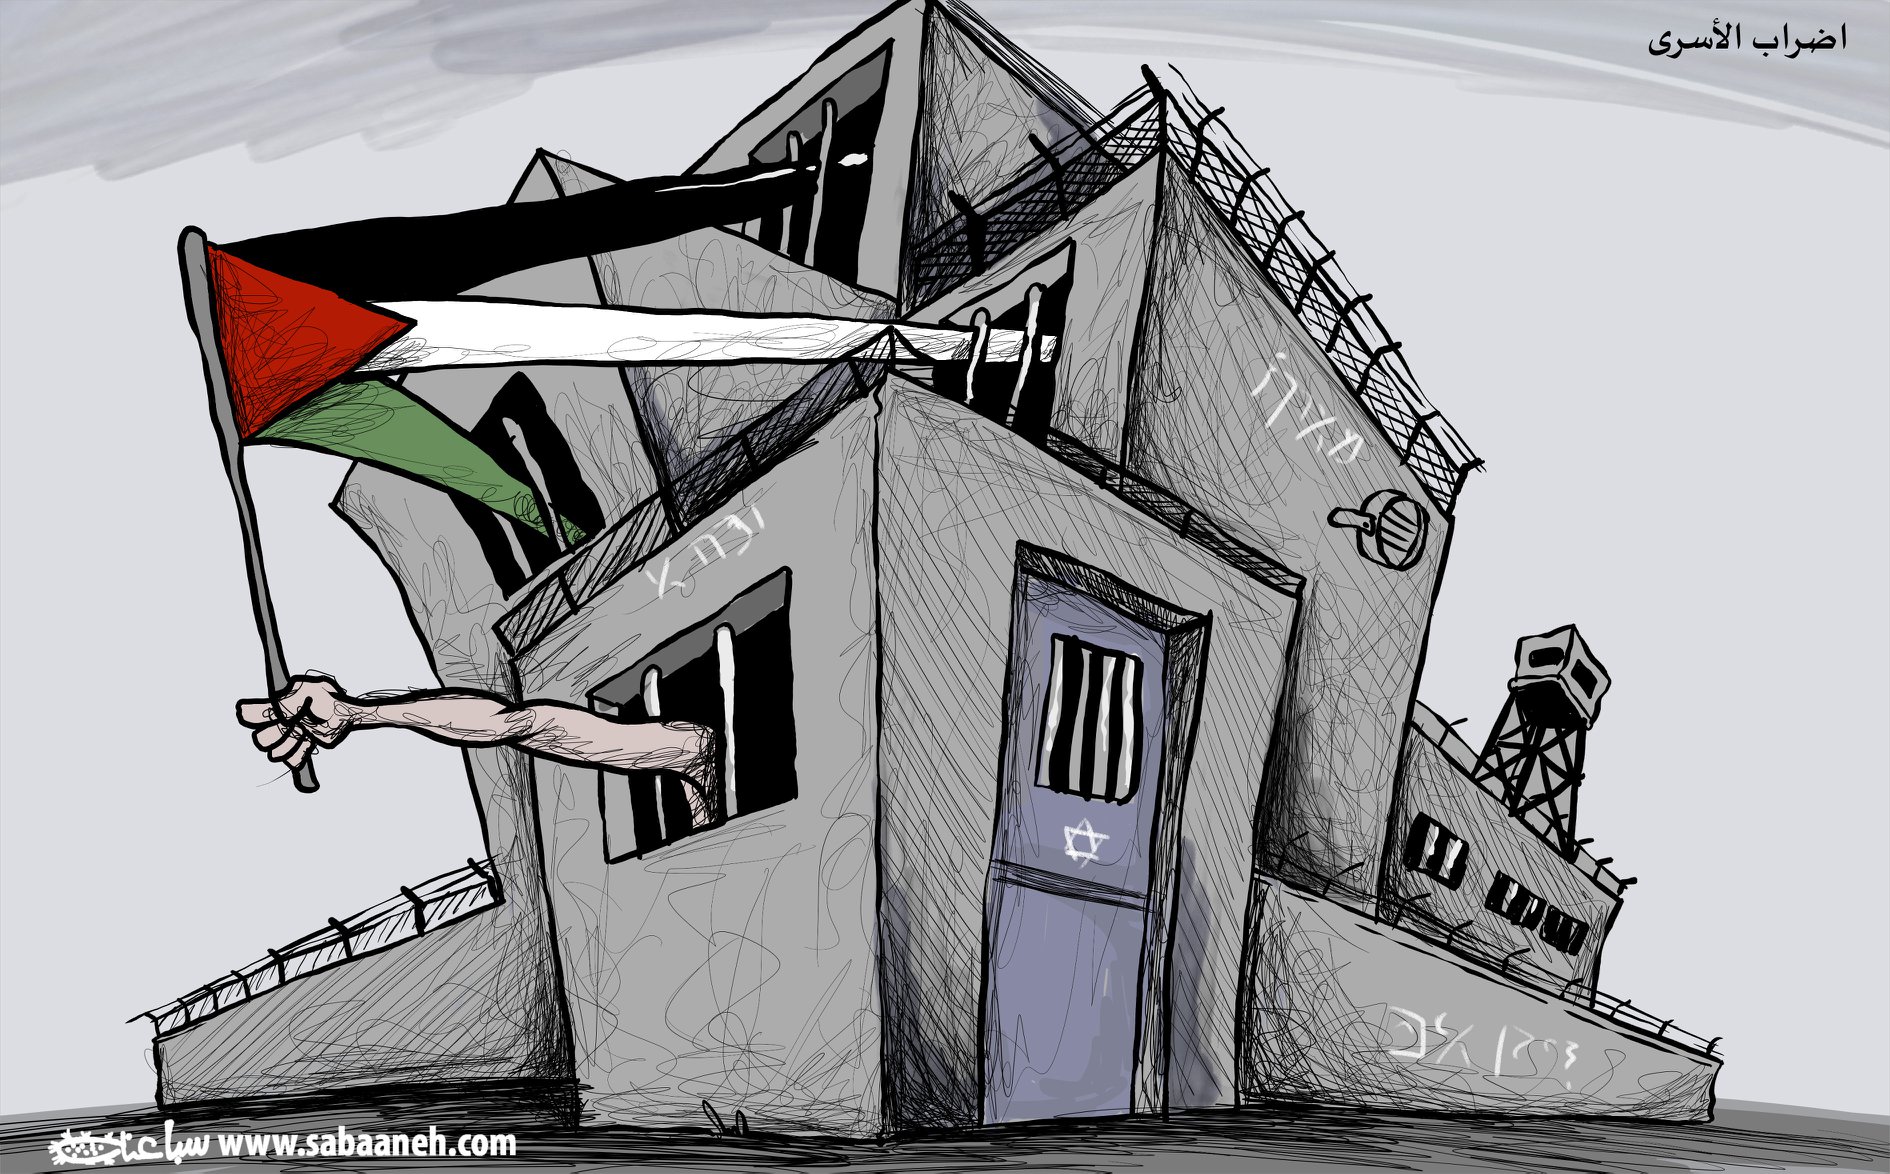 17 april Prisoners Day - Sabaaneh cartoon 2018